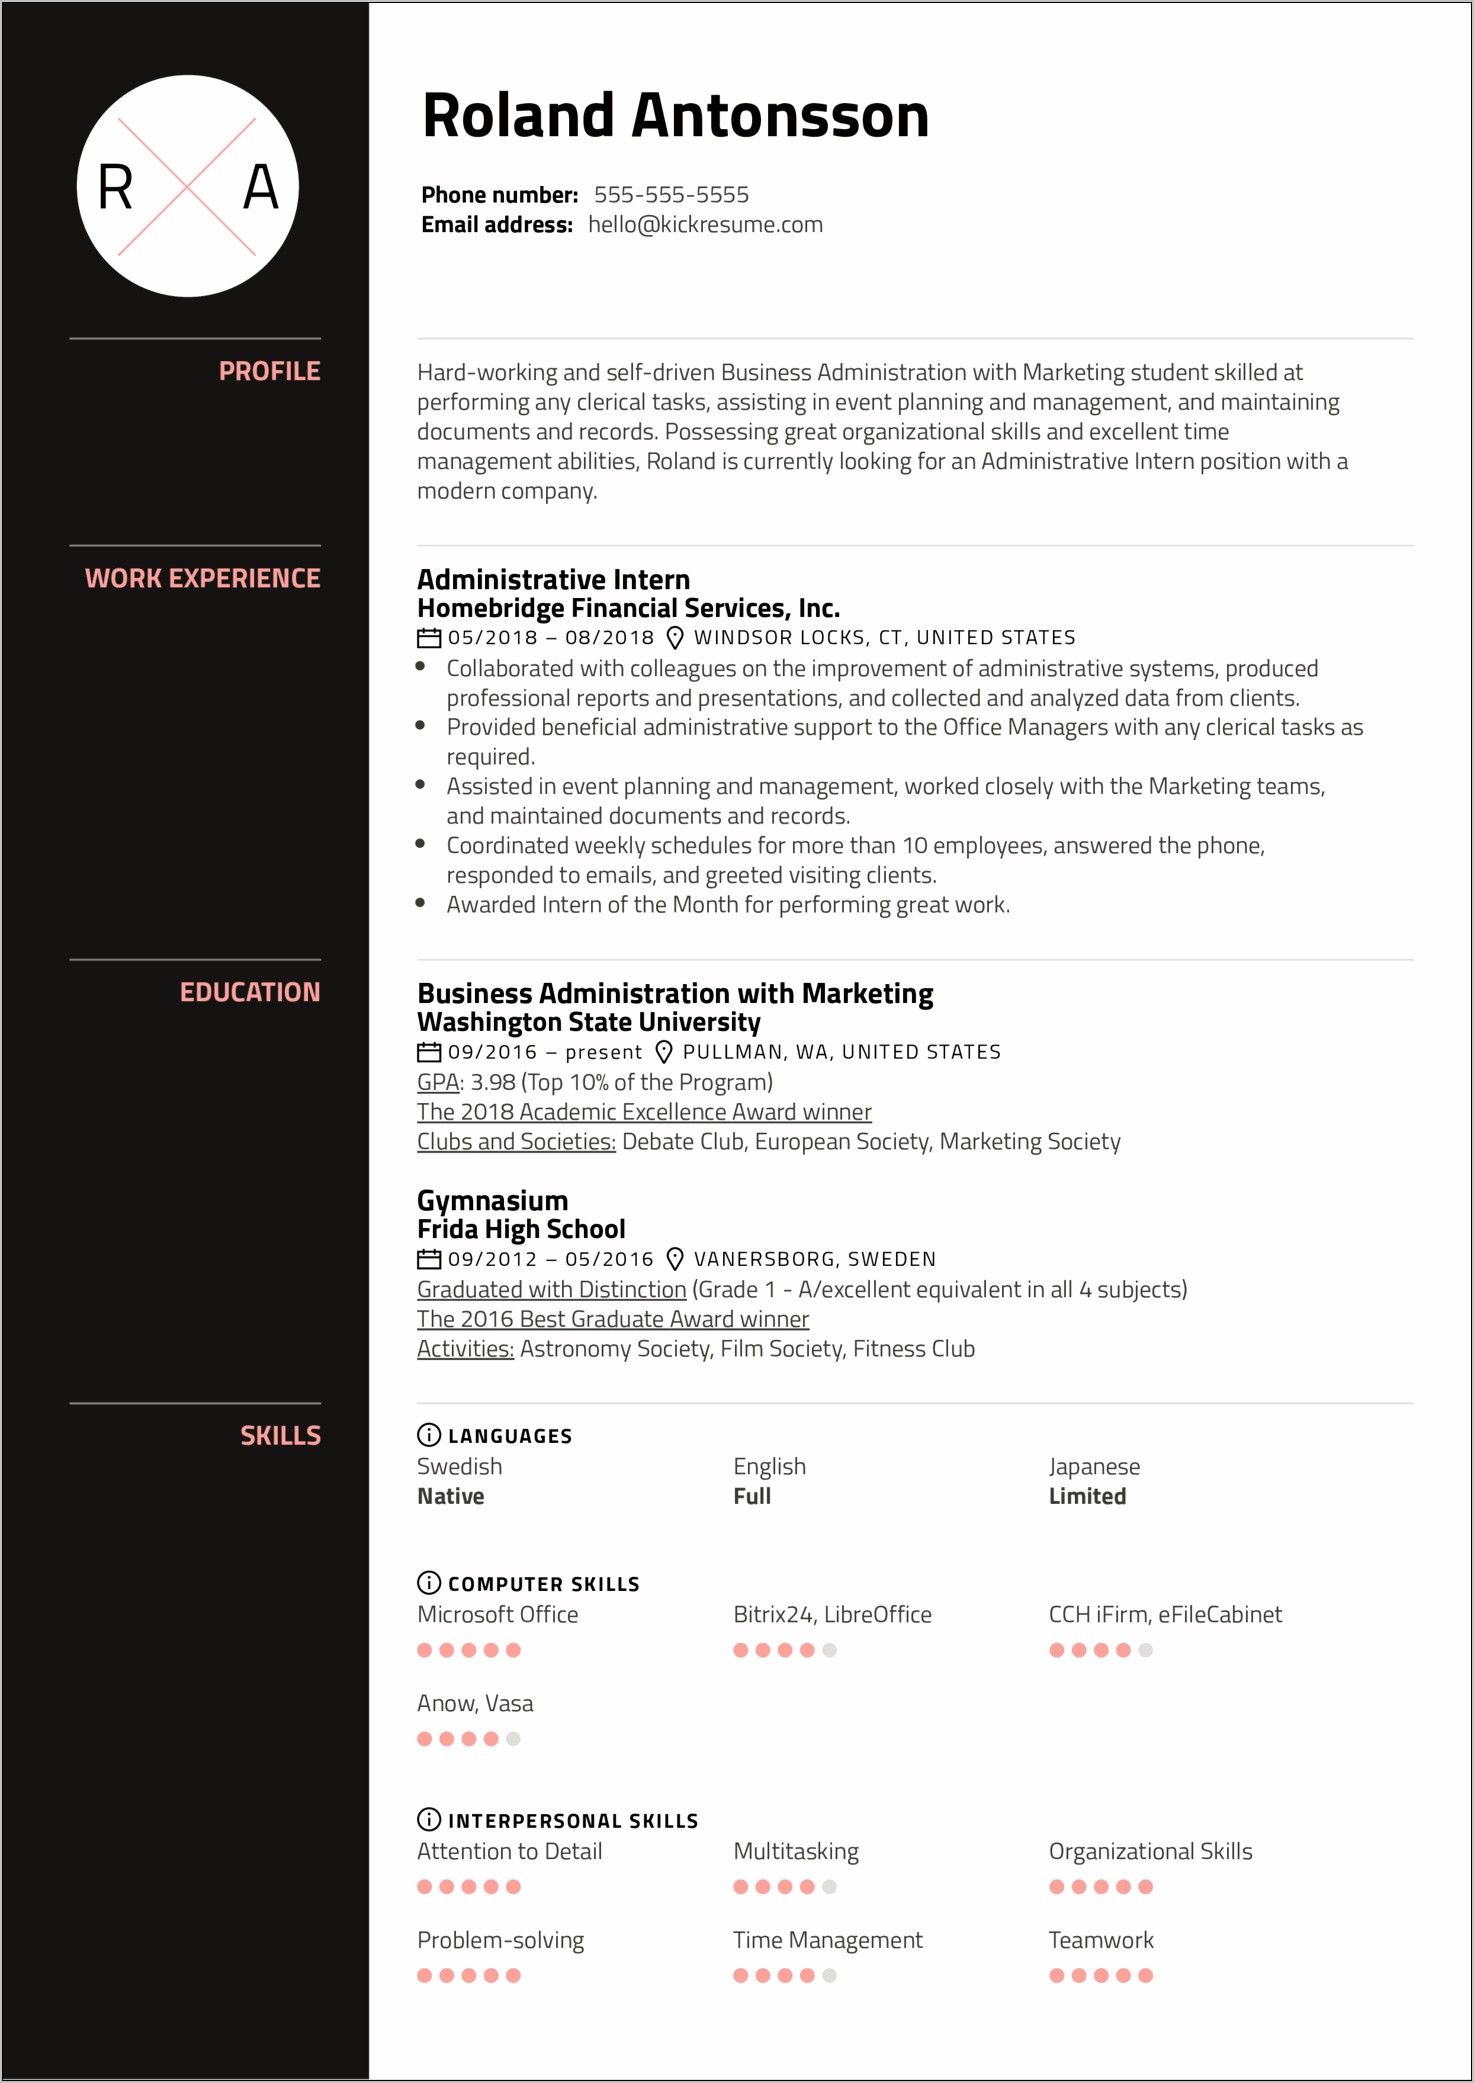 Resume Career Summary Examples Administrative